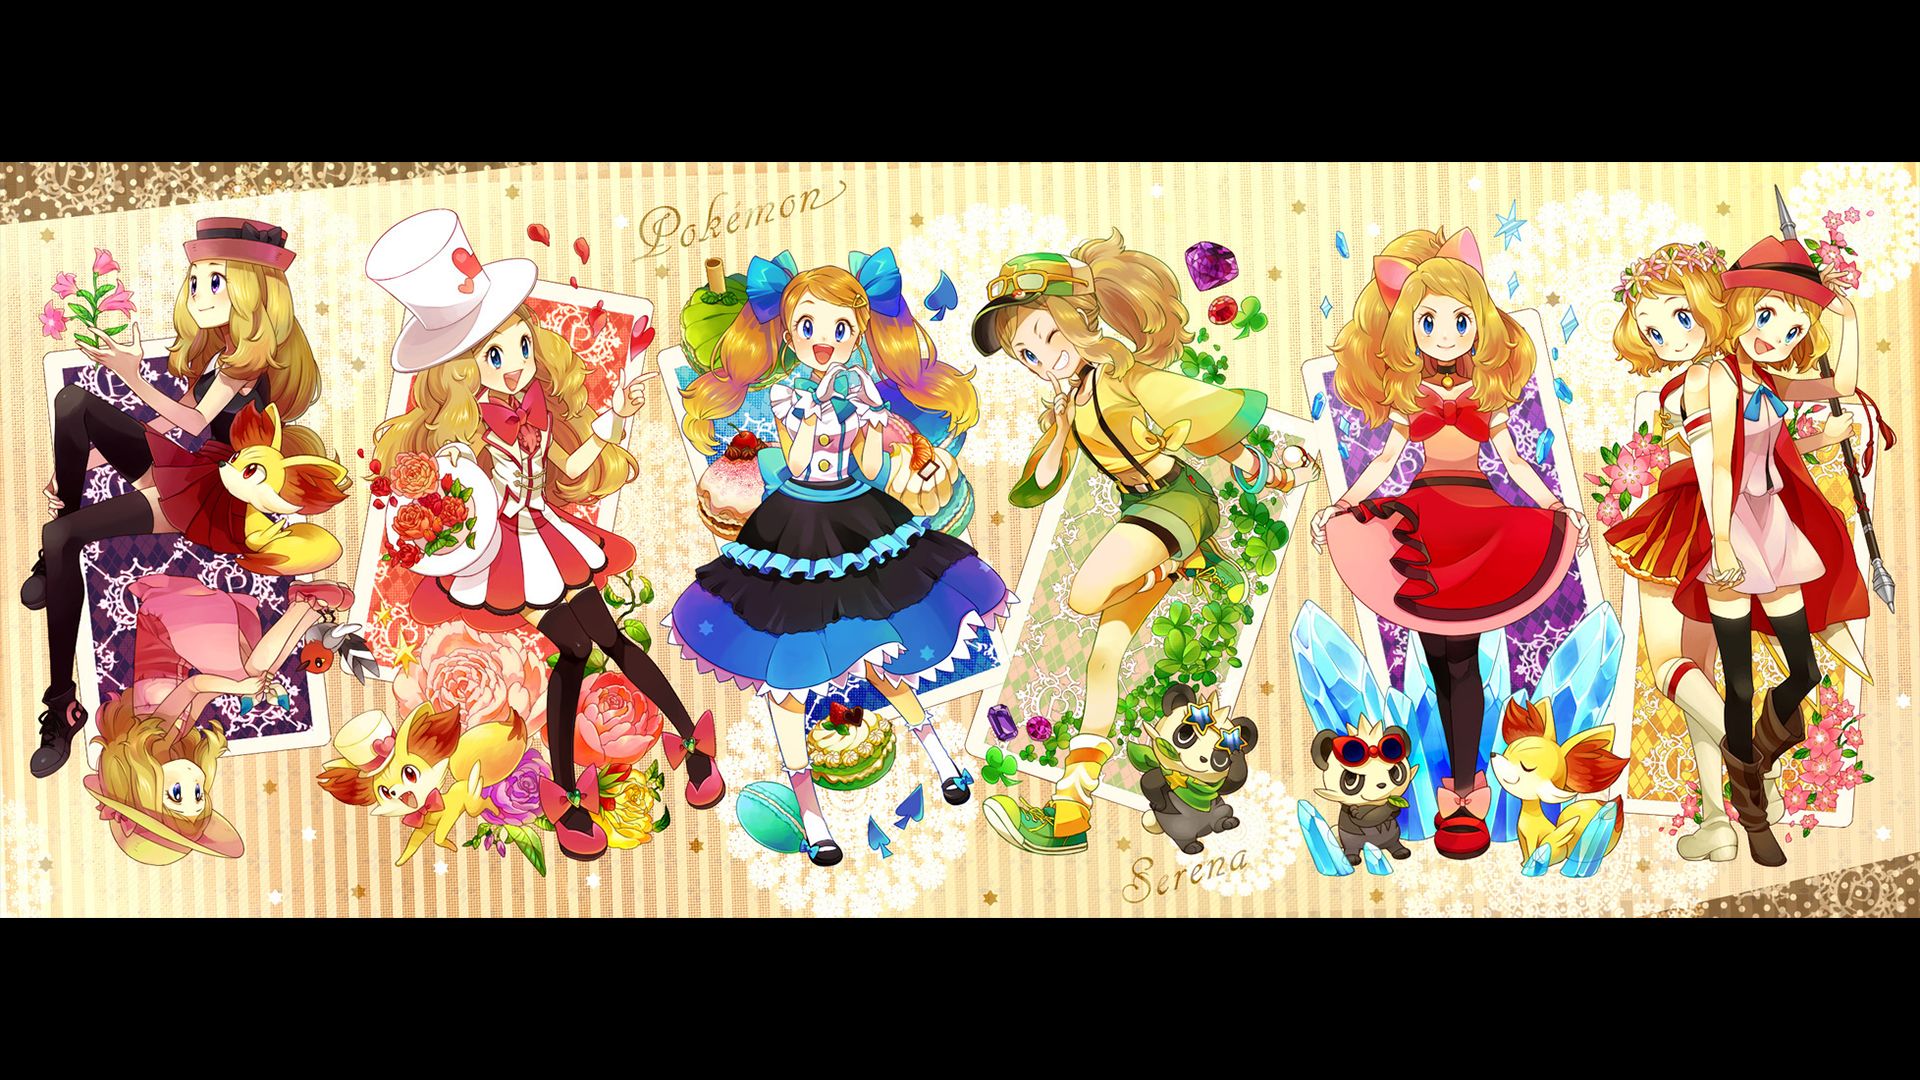 wallpapers serena (pokémon), anime, pokémon, blonde, blue eyes, blush, boots, bow (clothing), dress, earrings, fennekin (pokémon), flower, glasses, glove, hat, jewelry, long hair, pancham (pokémon), pink dress, purple eyes, red eyes, short hair, shorts, skirt, smile, thigh highs, twintails